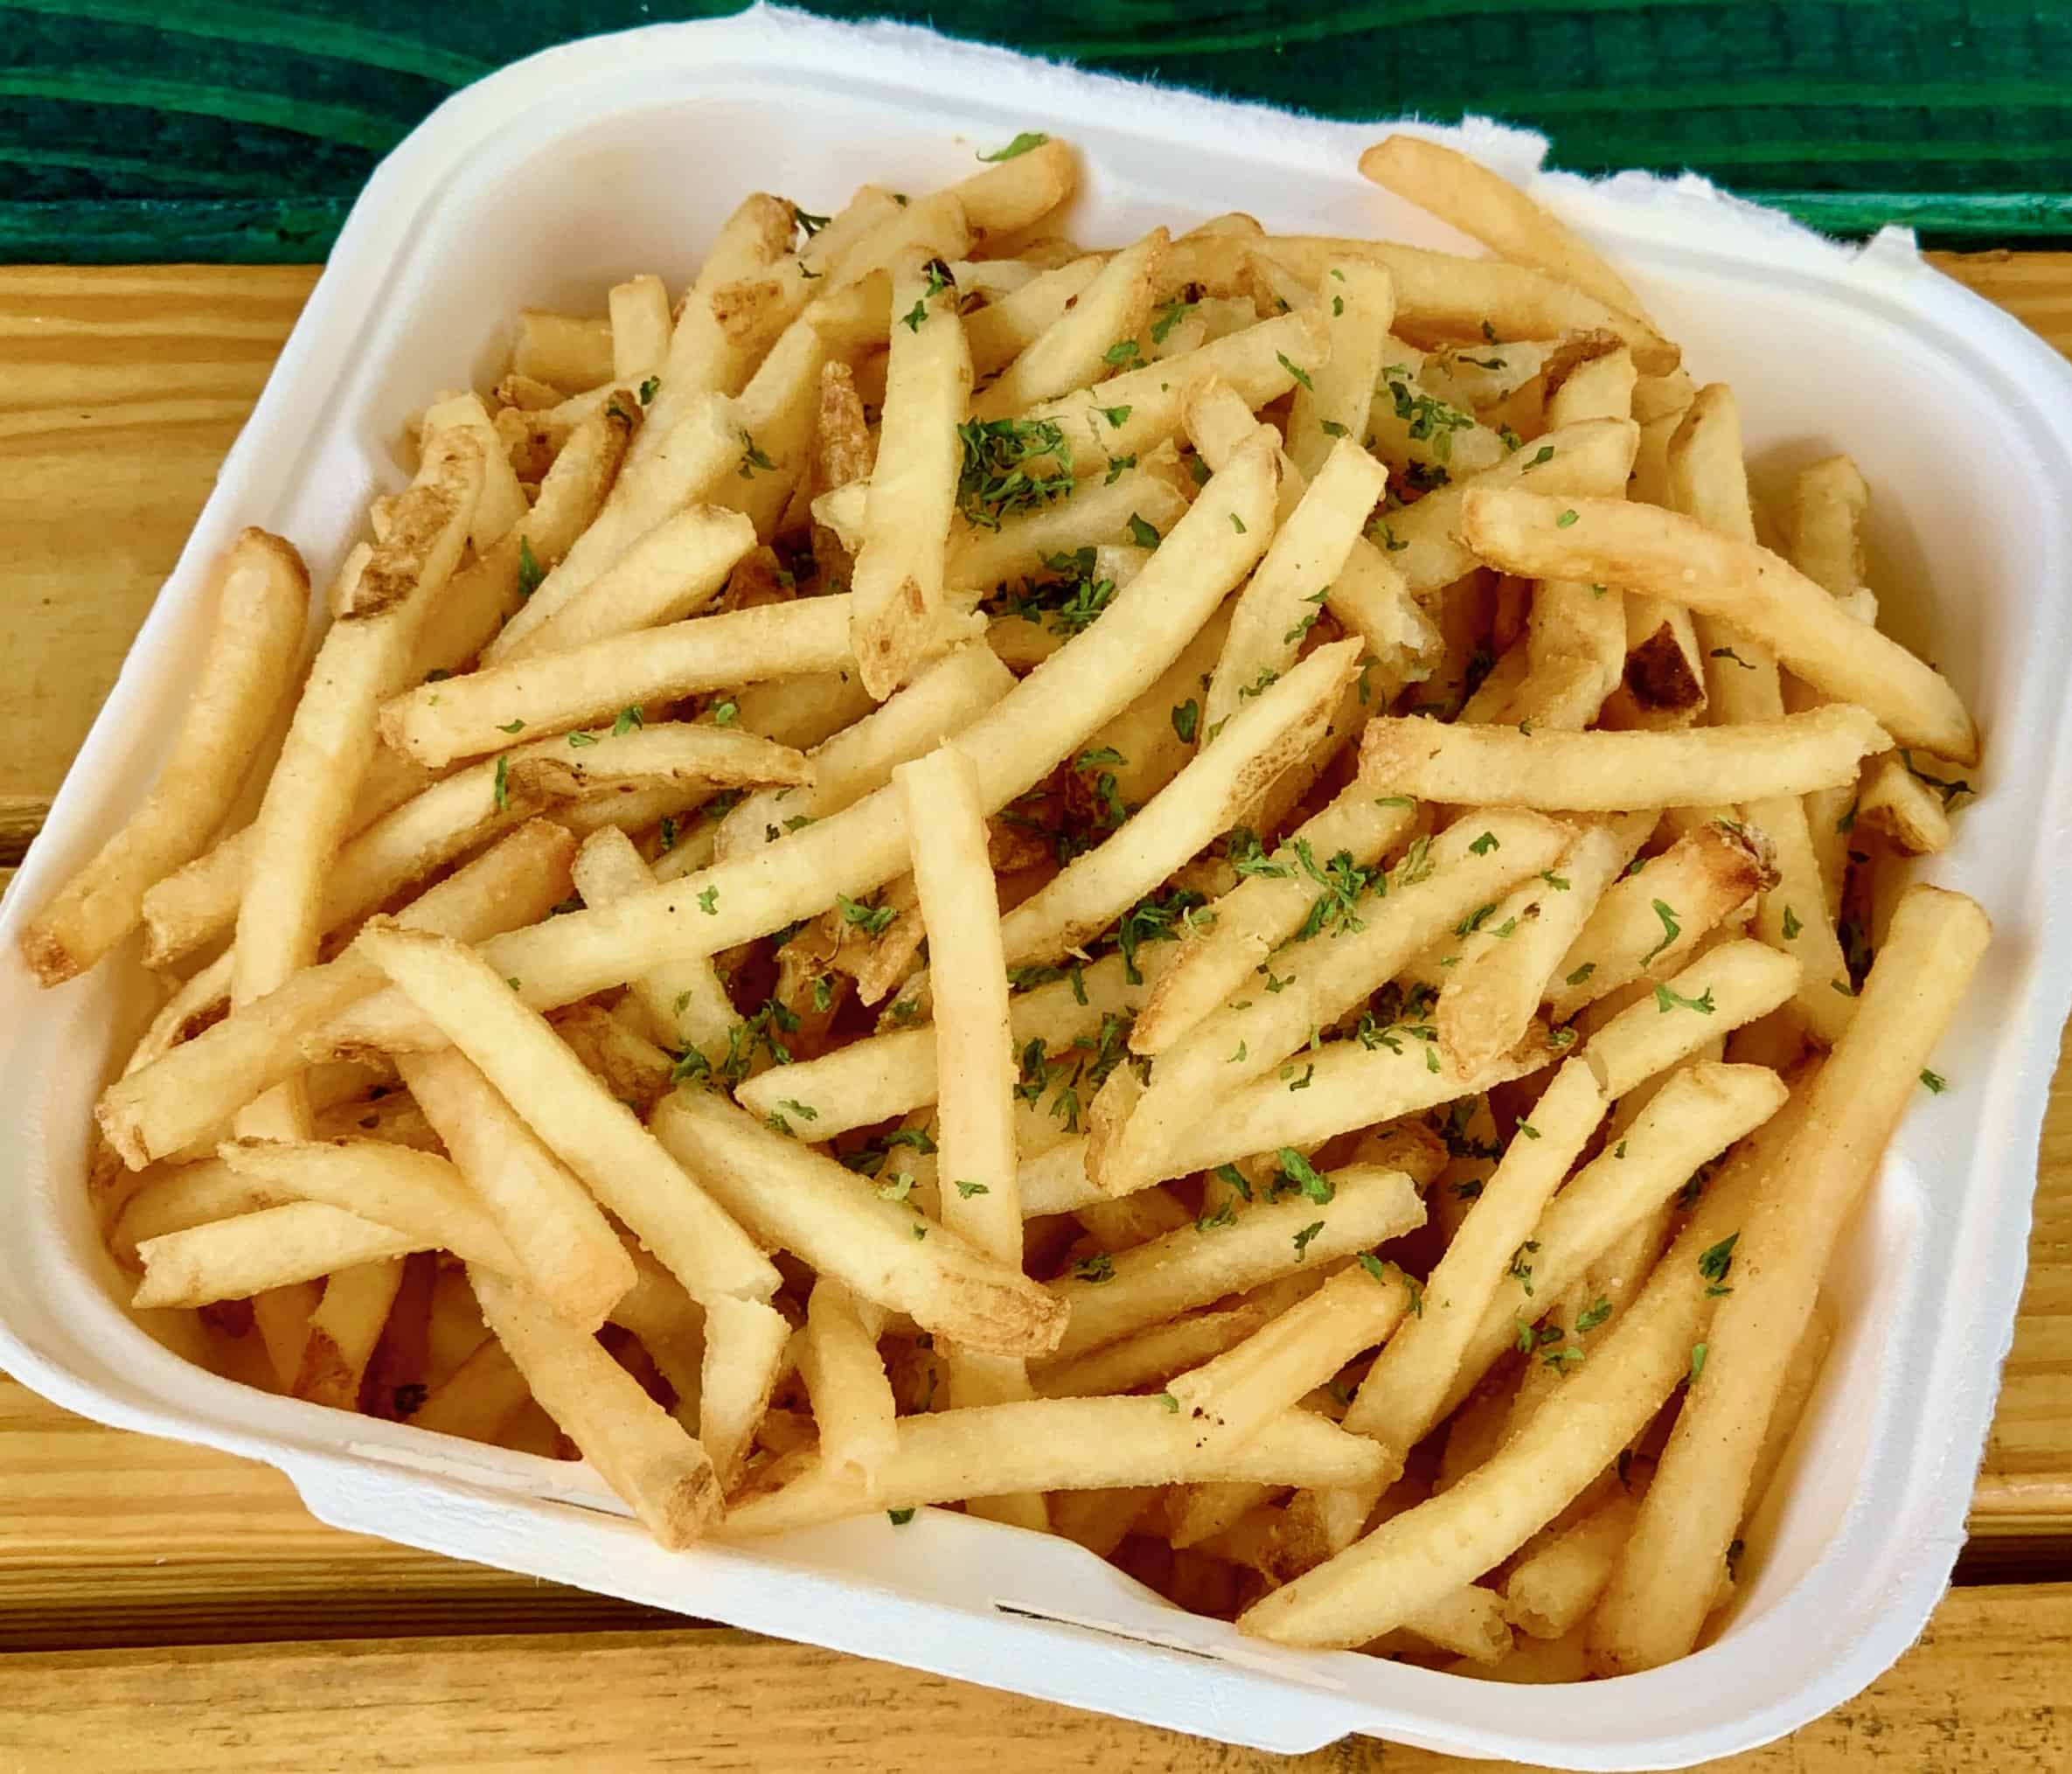 Get Naked Fries (Regular)